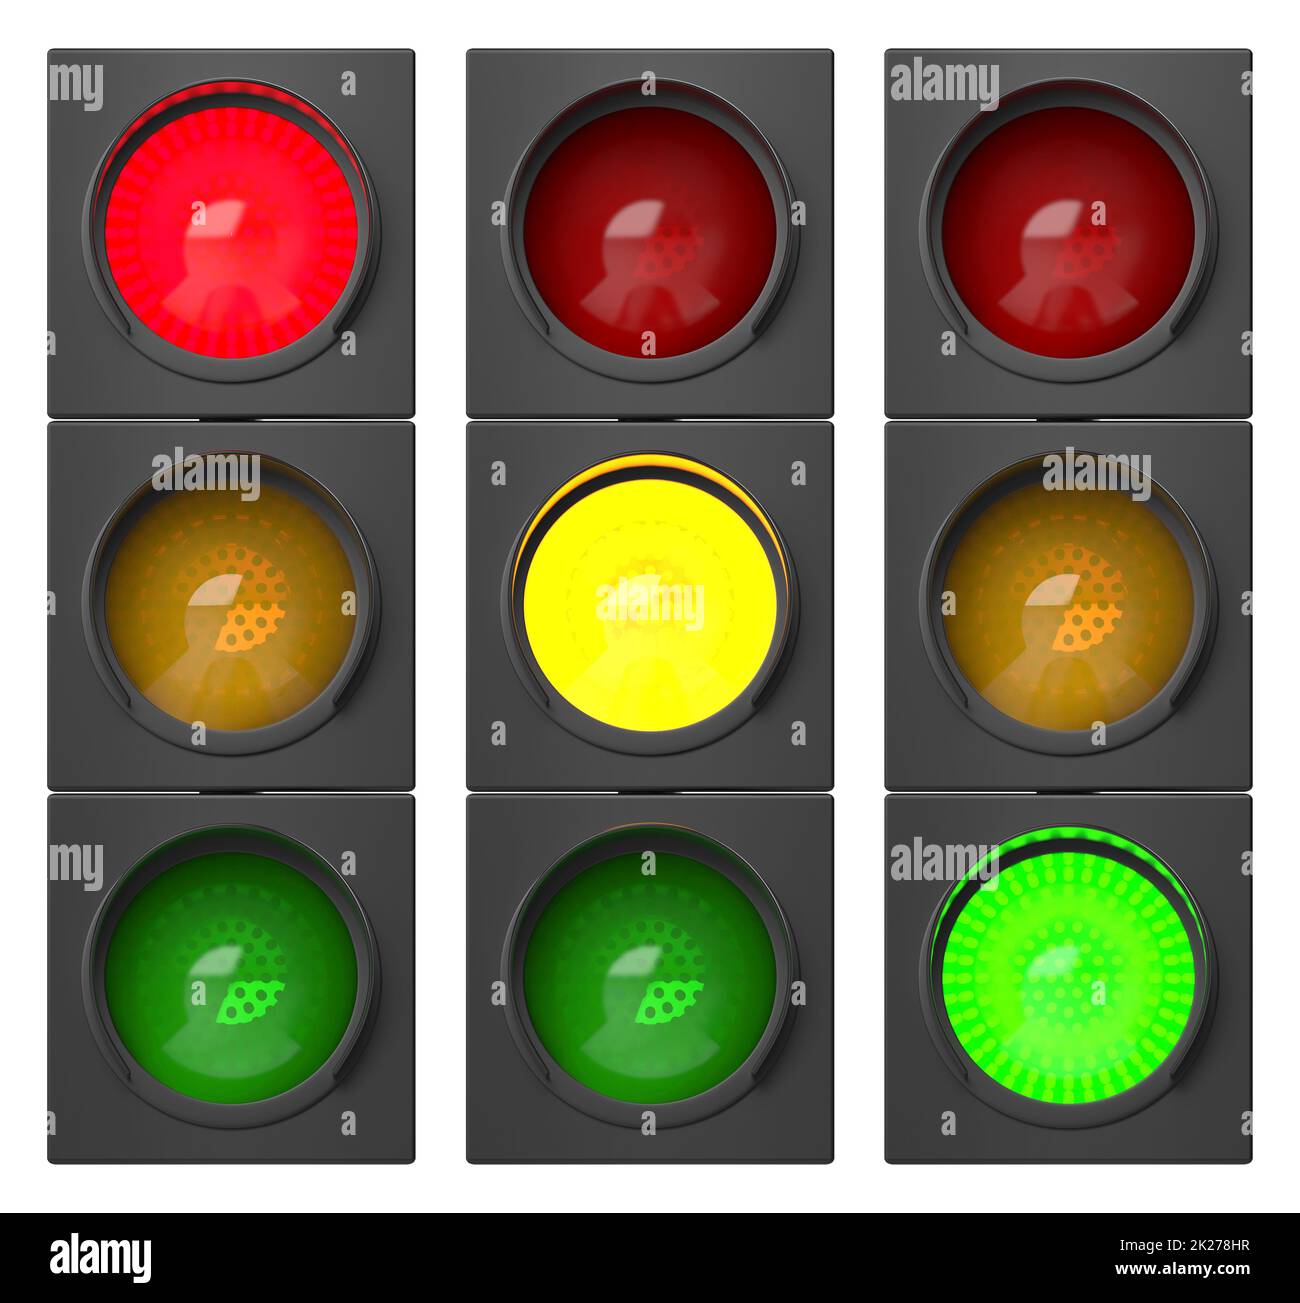 Set of traffic lights Stock Photo